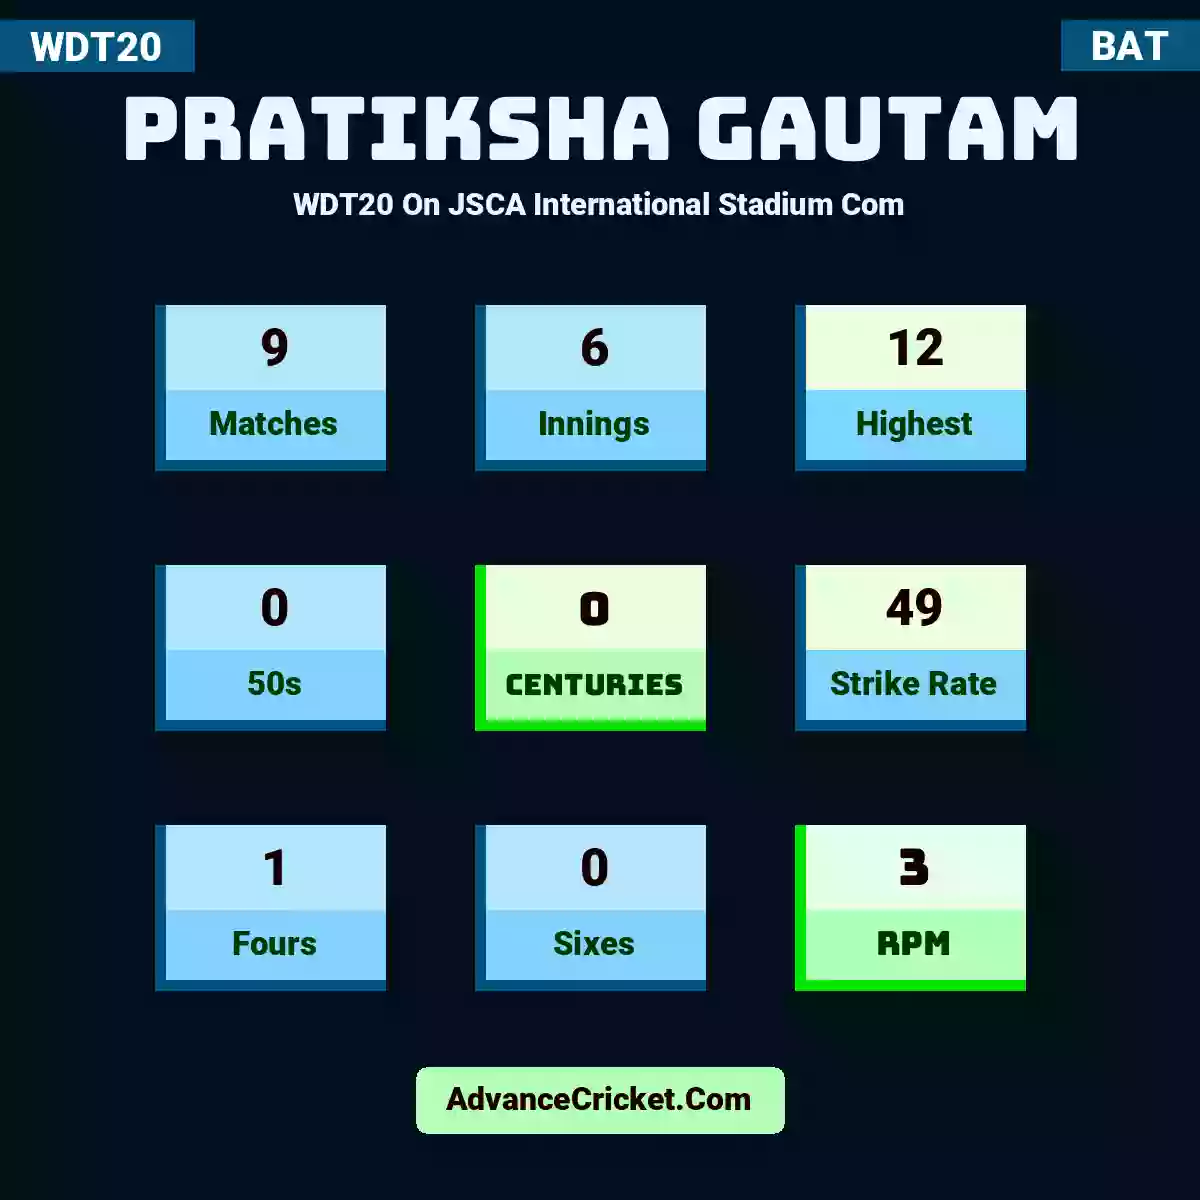 Pratiksha Gautam WDT20  On JSCA International Stadium Com, Pratiksha Gautam played 9 matches, scored 12 runs as highest, 0 half-centuries, and 0 centuries, with a strike rate of 49. P.Gautam hit 1 fours and 0 sixes, with an RPM of 3.